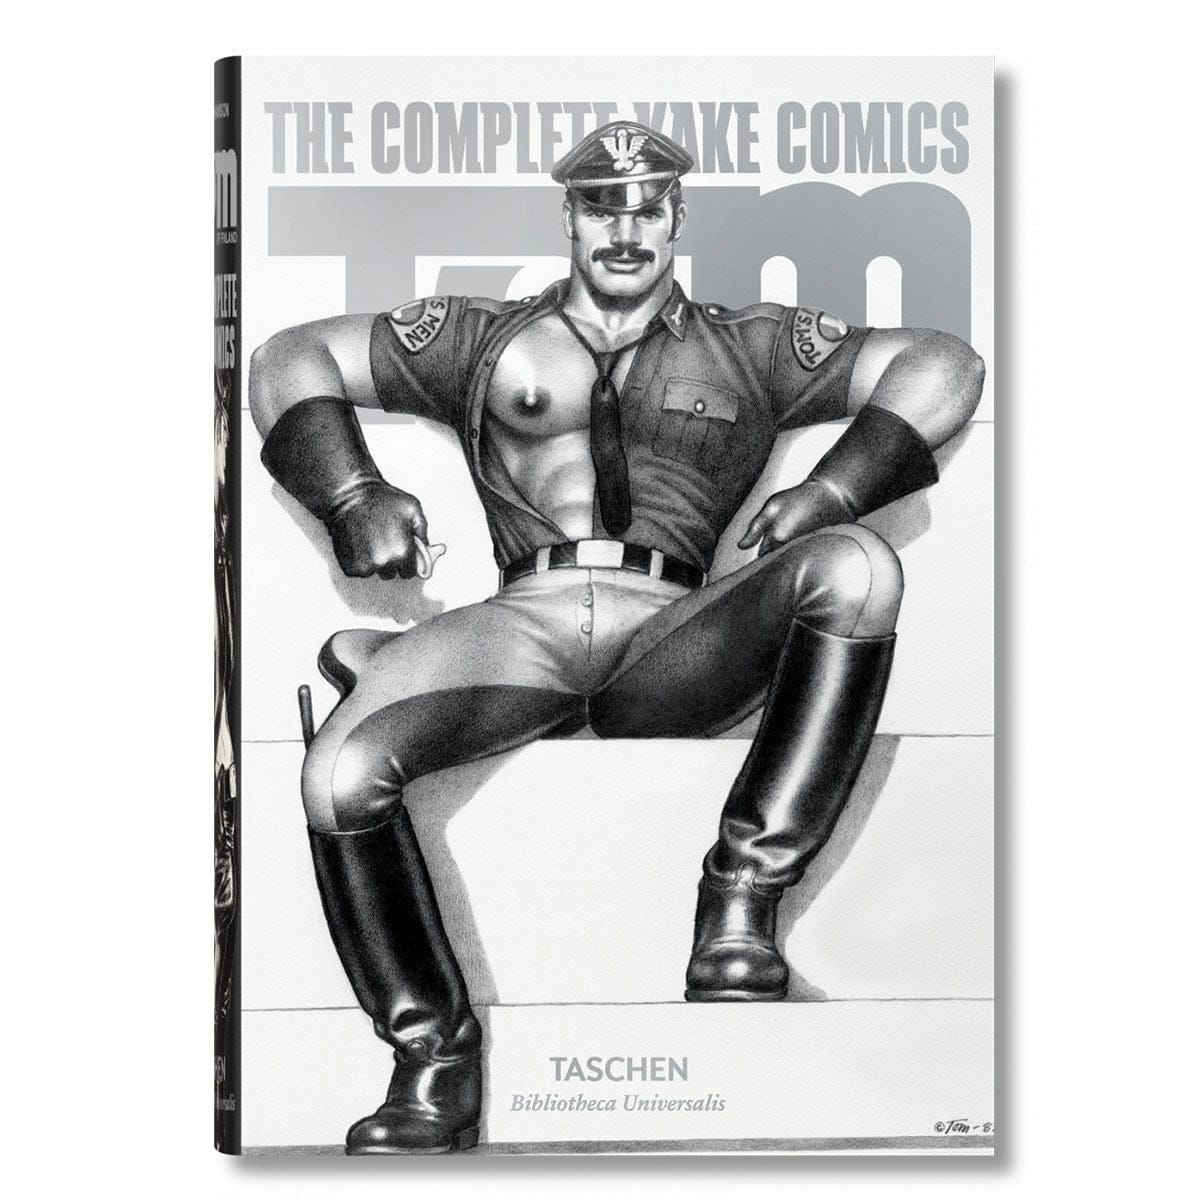 Tom of Finland: The Complete Kake Comics - Rolik®